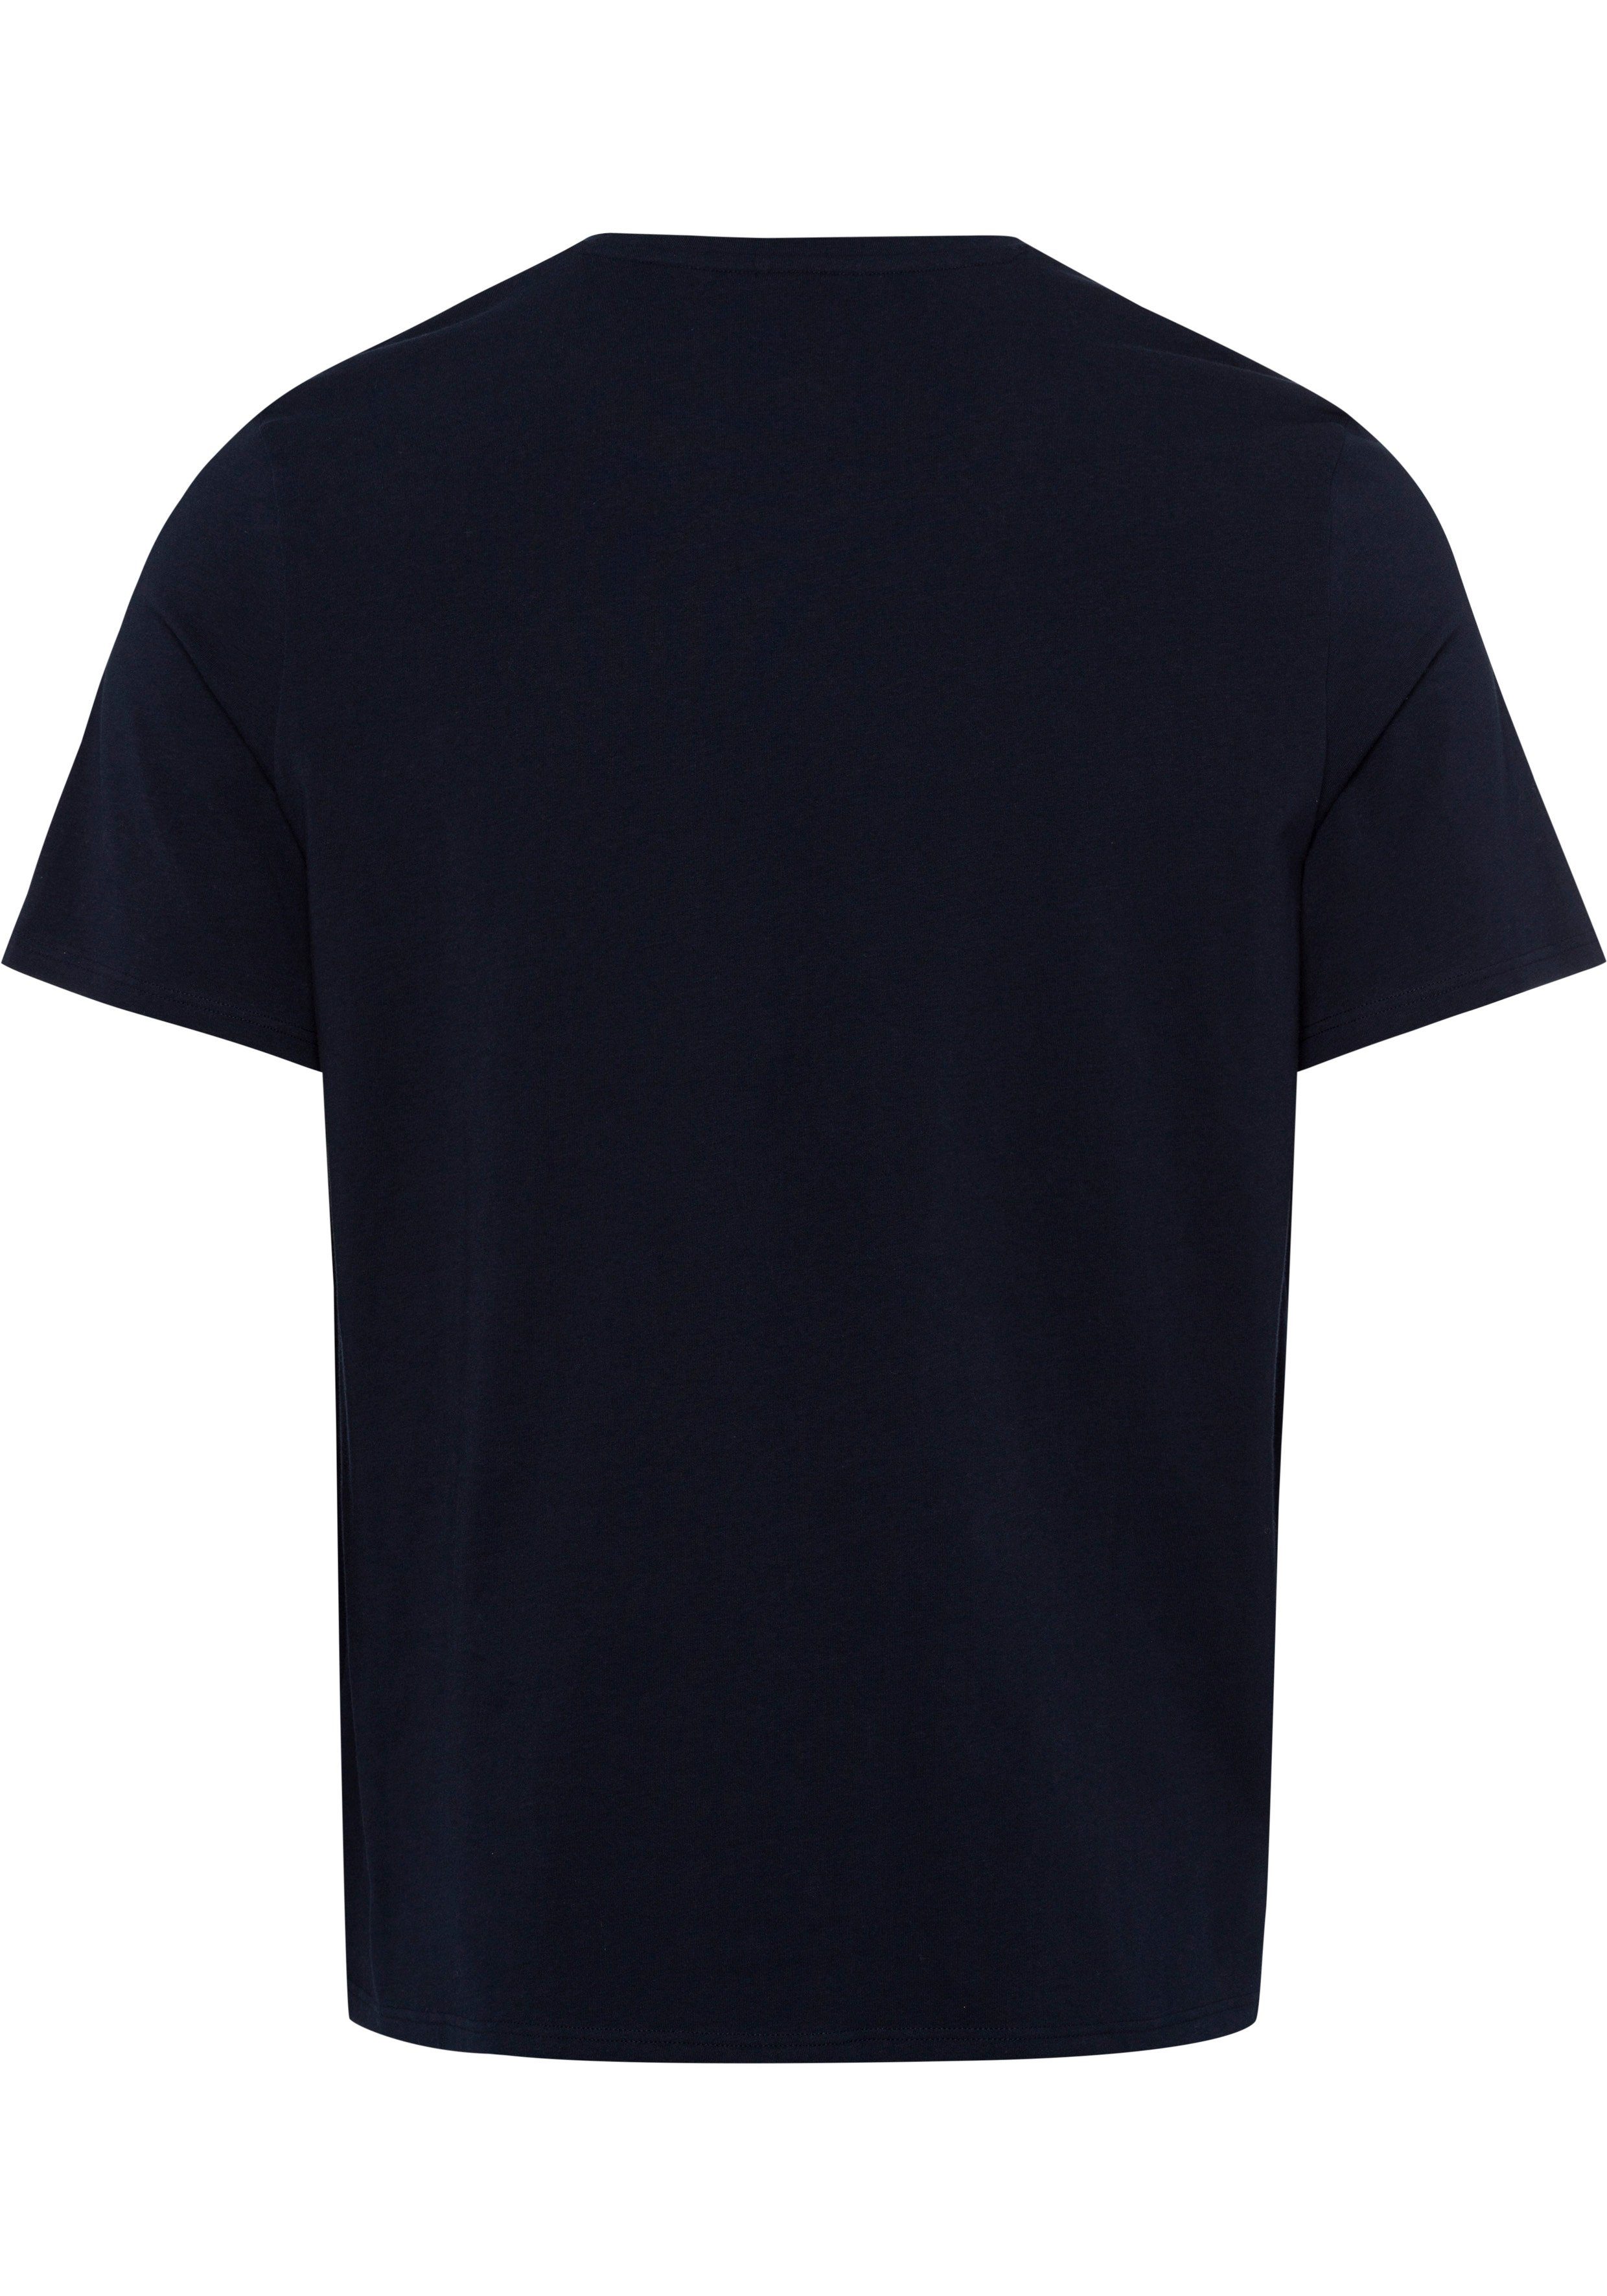 BOSS T-Shirt dunkelblau Logodruck mit